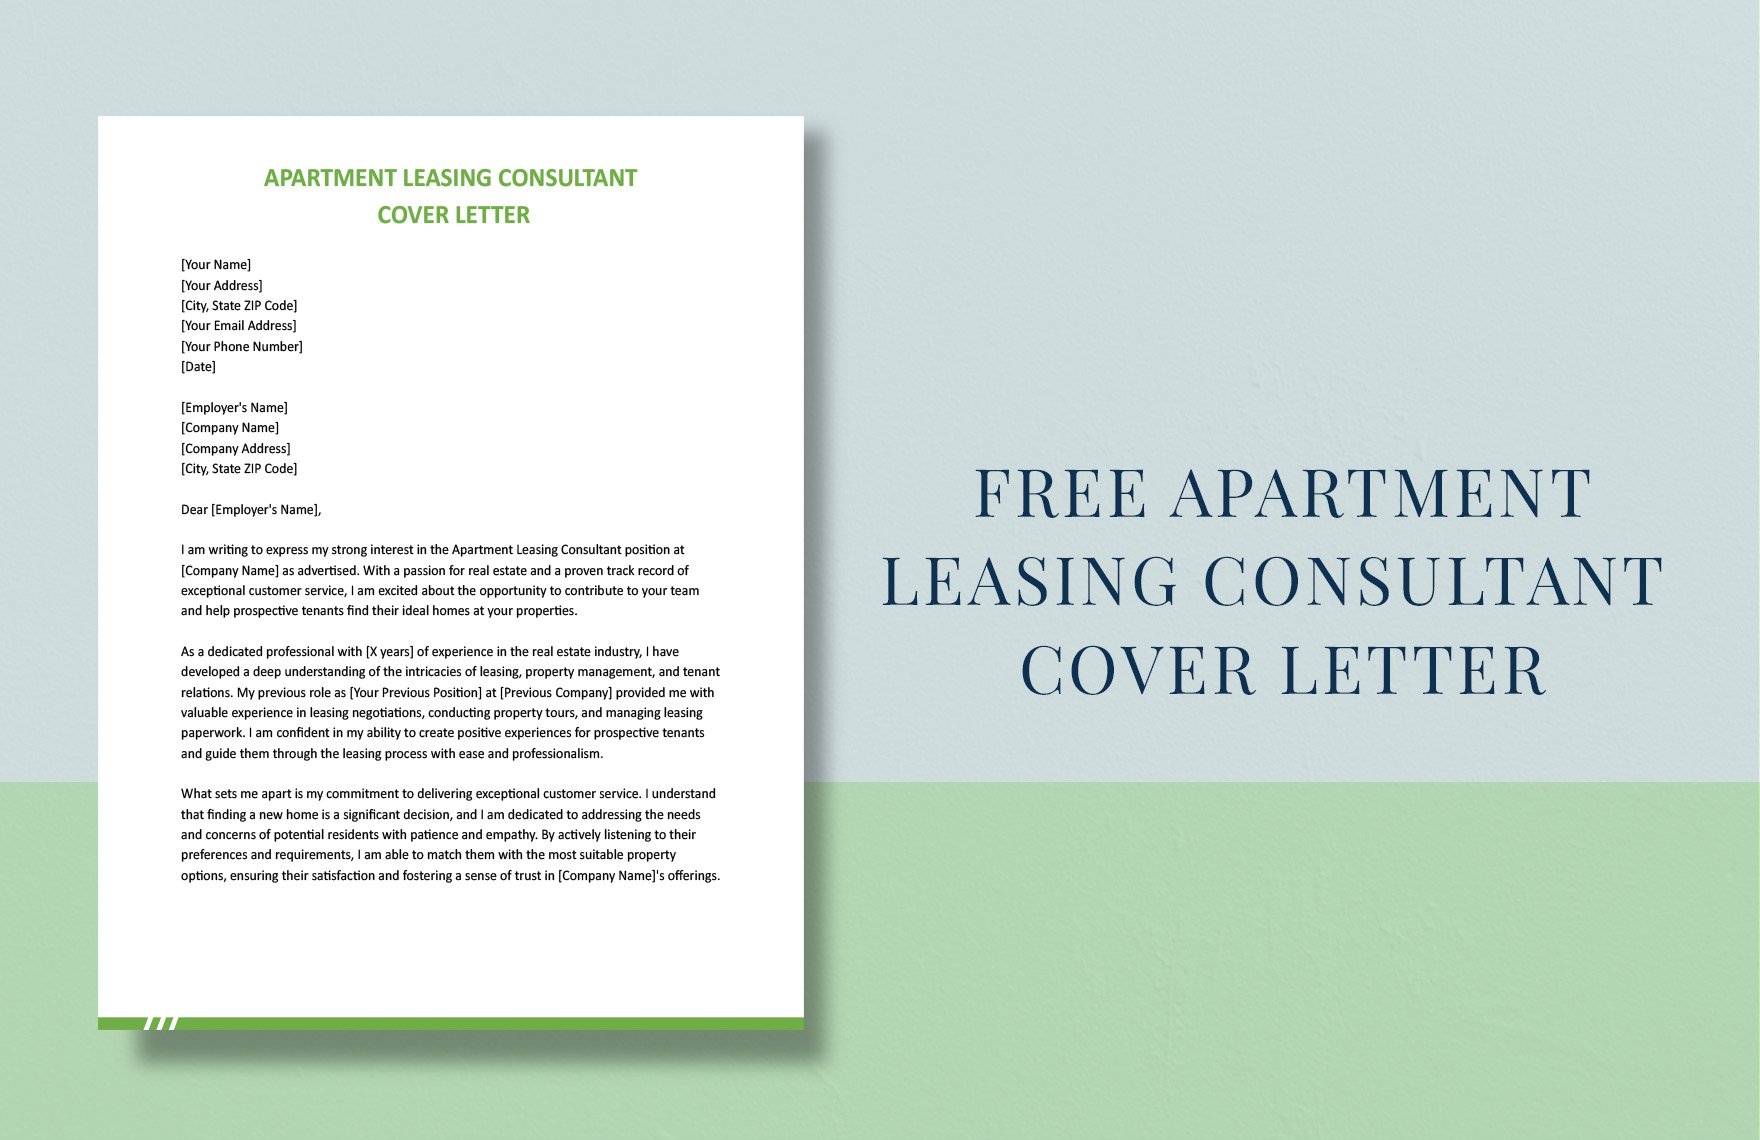 Apartment Leasing Consultant Cover Letter